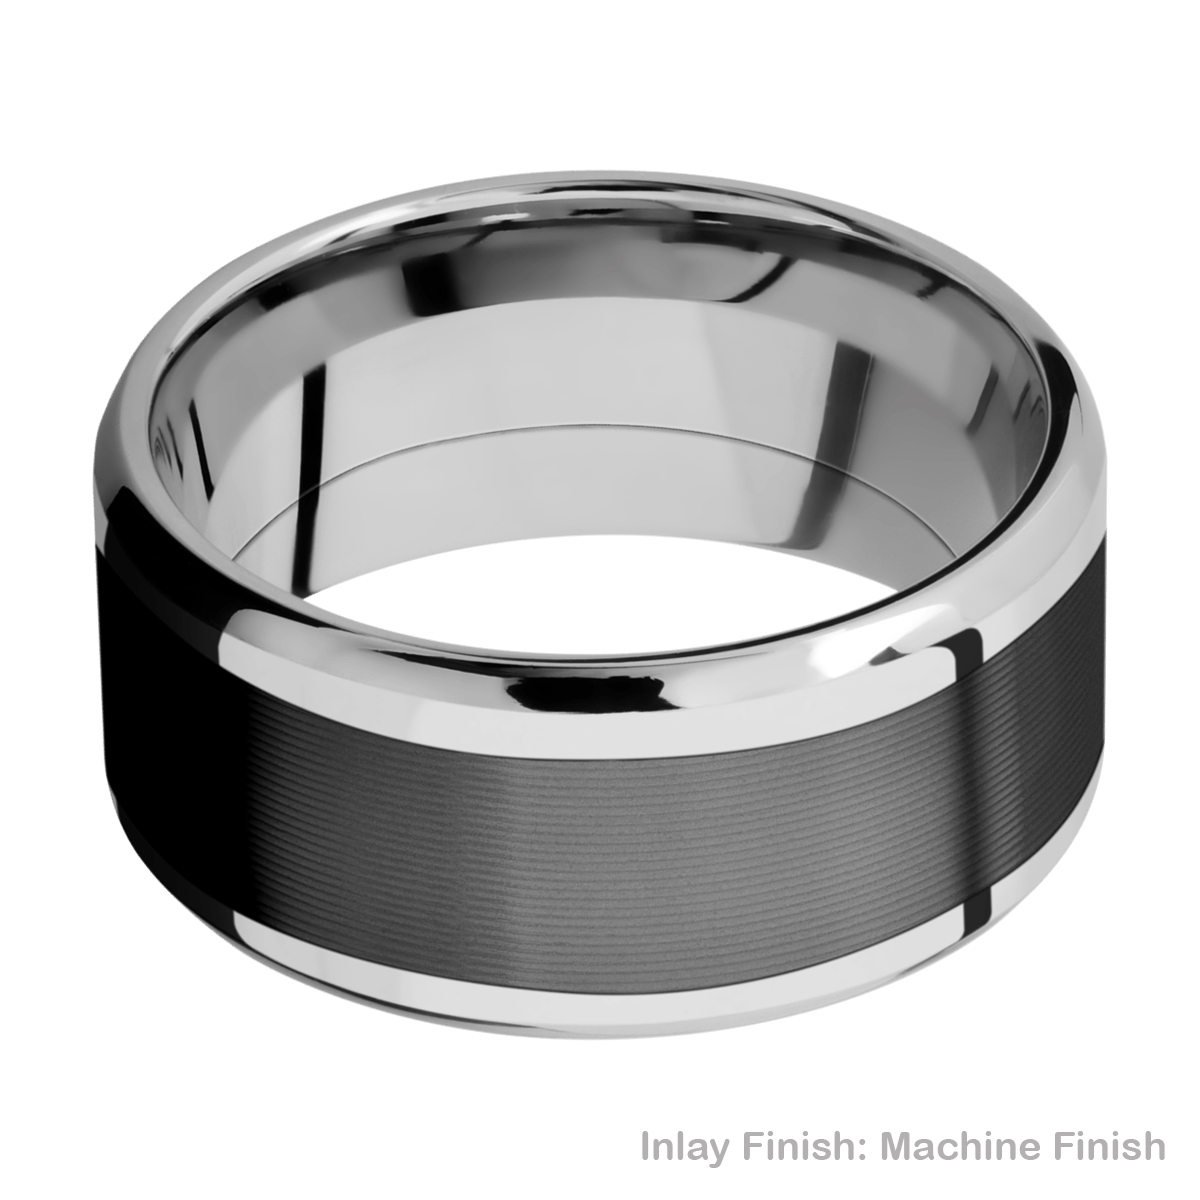 Lashbrook CCPF10B17(NS)/ZIRCONIUM Cobalt Chrome Wedding Ring or Band